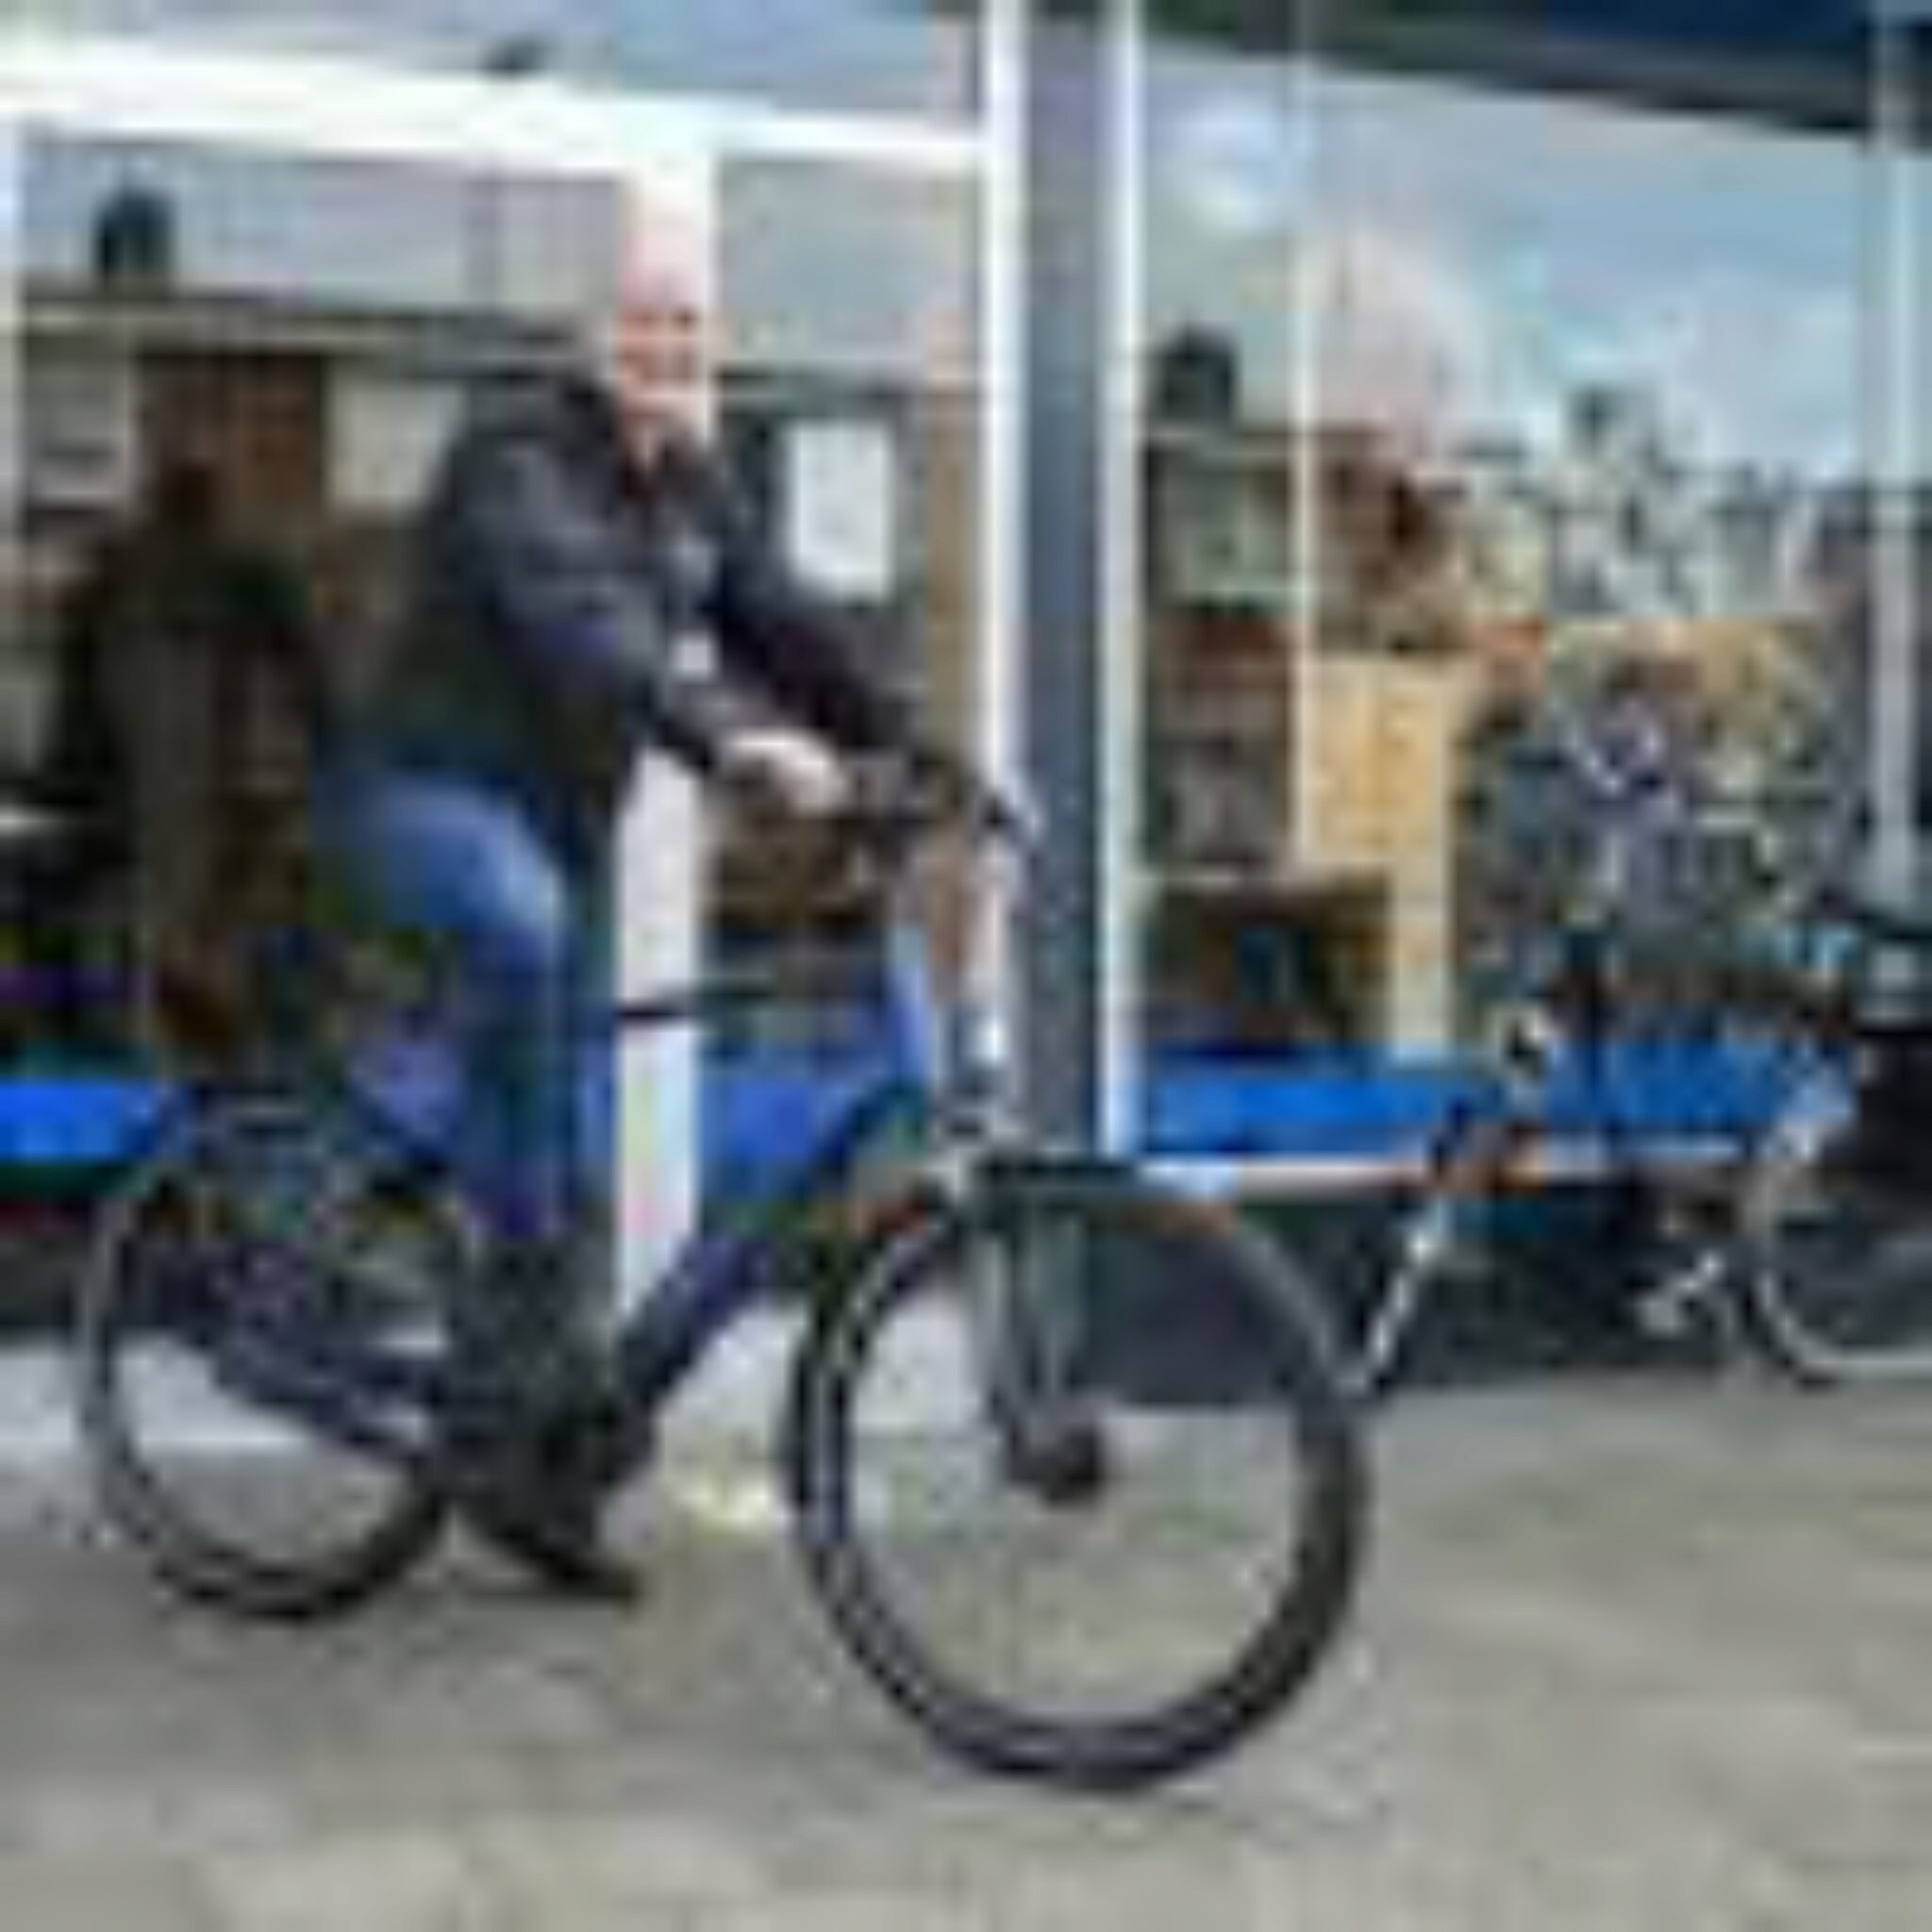 E-bikes Worden Goedkoper